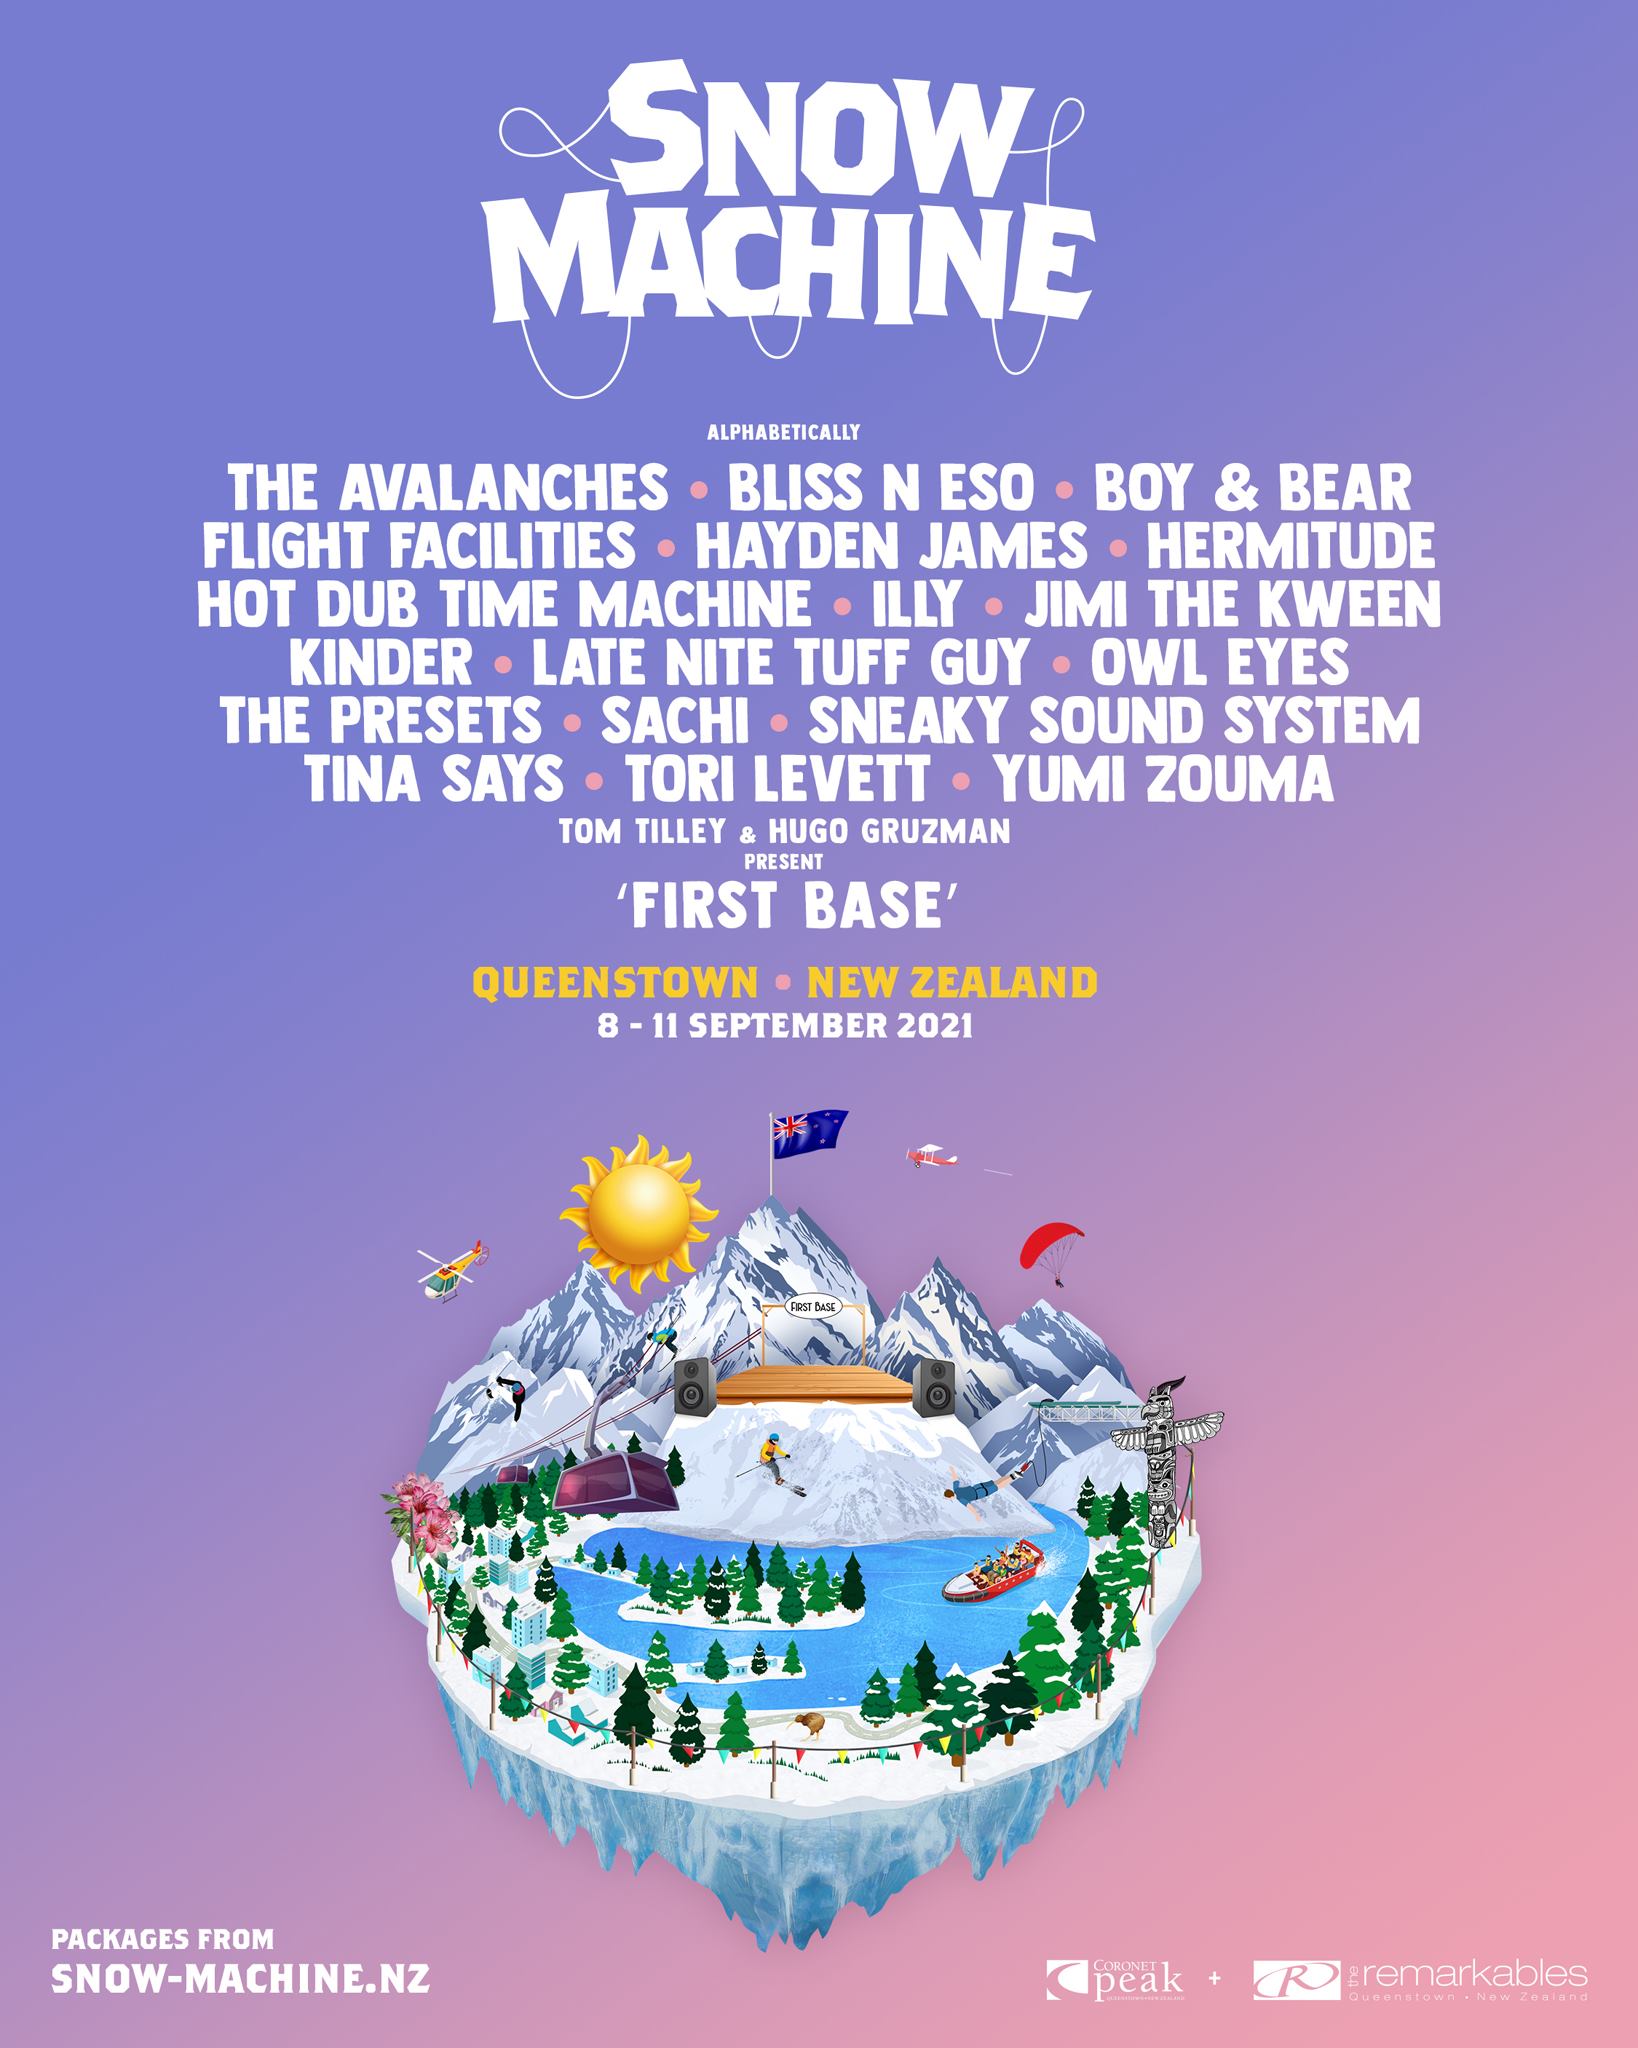 snow-machine-2021-festival-queenstown-new-zealand-poster-oz-edm